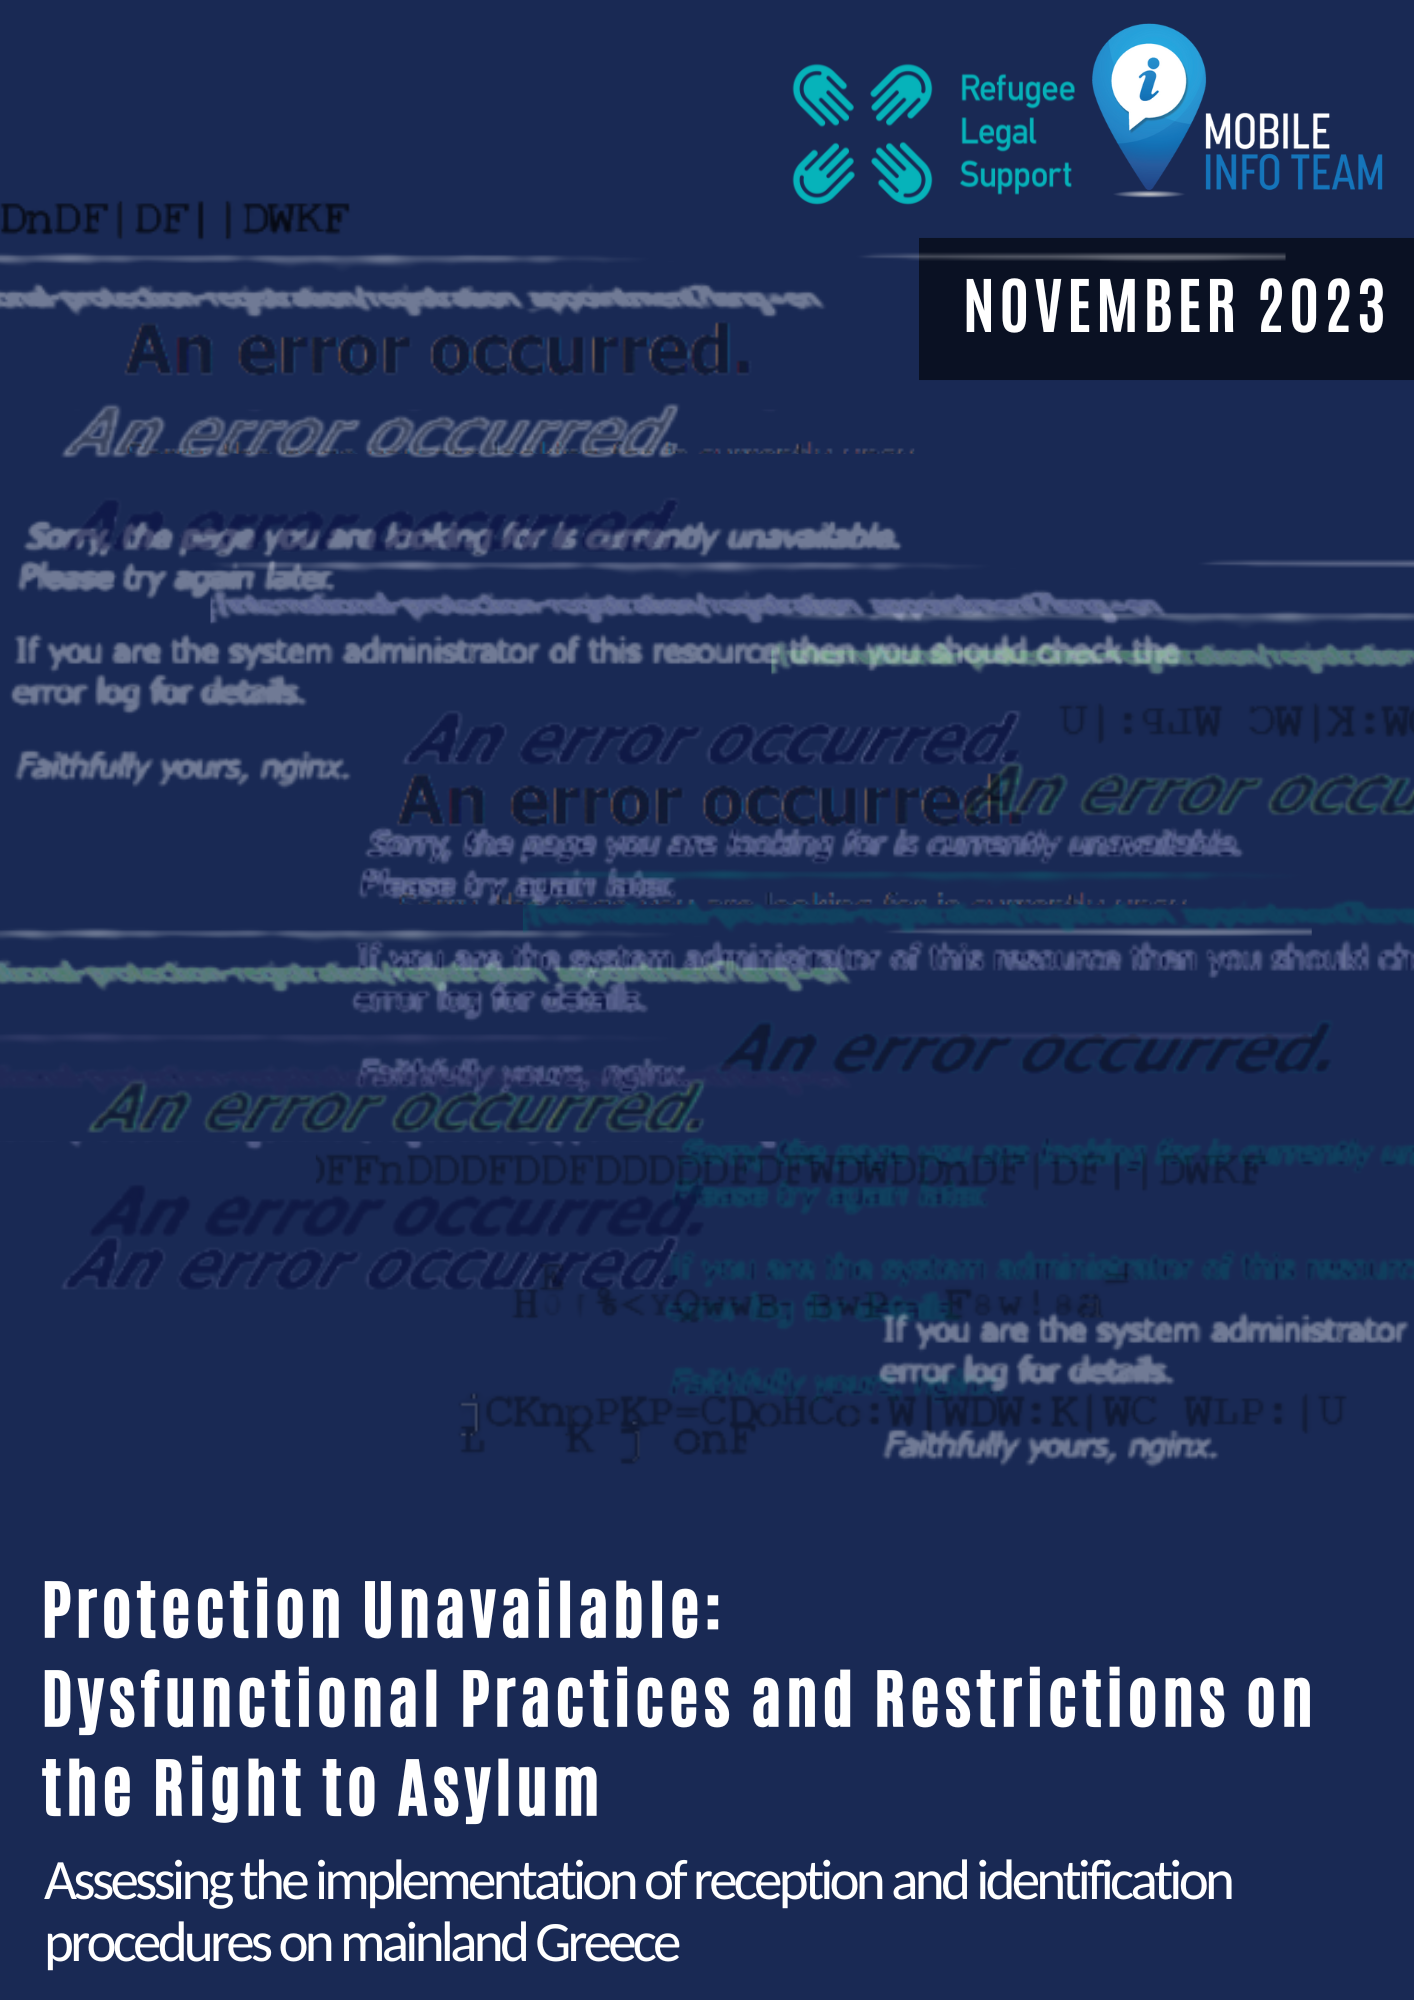 Nov 23' - Report: Protection Unavailable